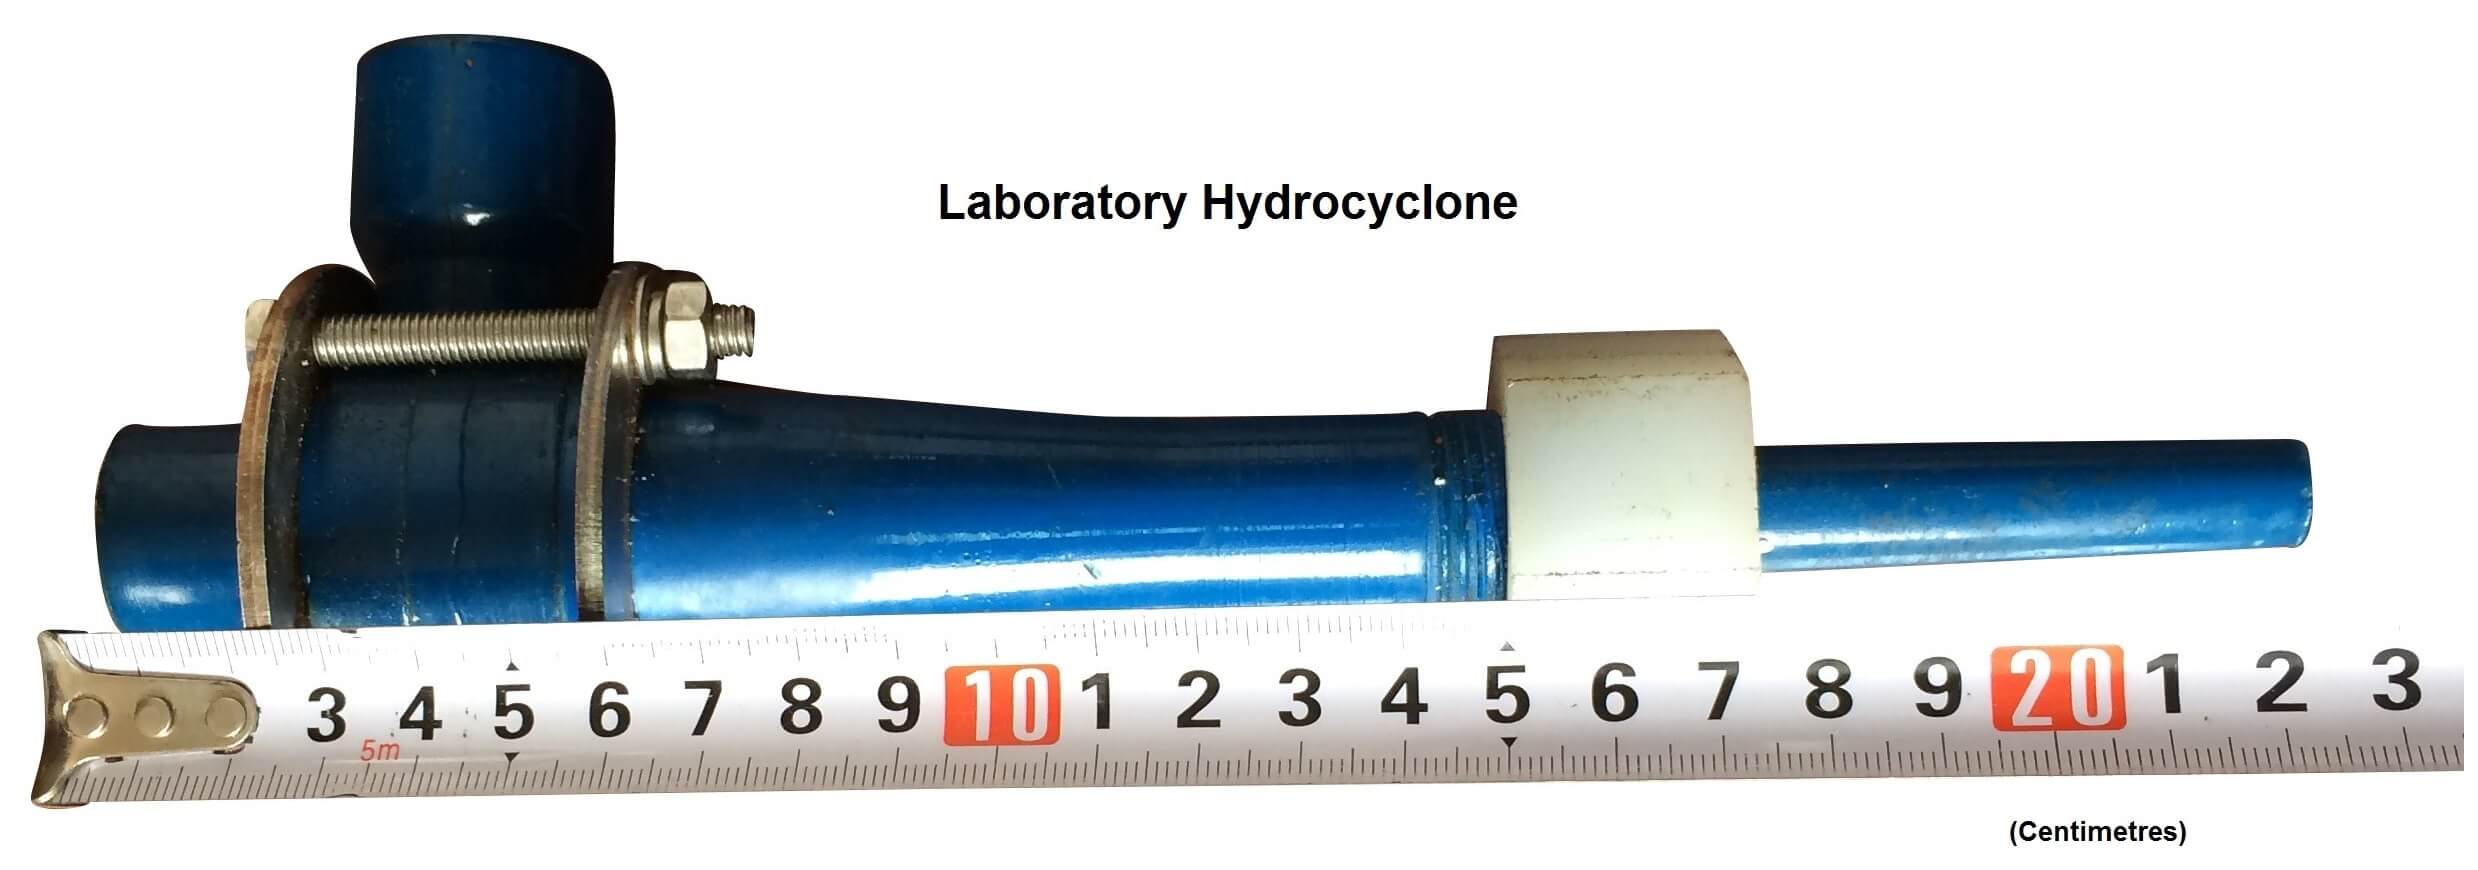 laboratory hydrocyclone (1)